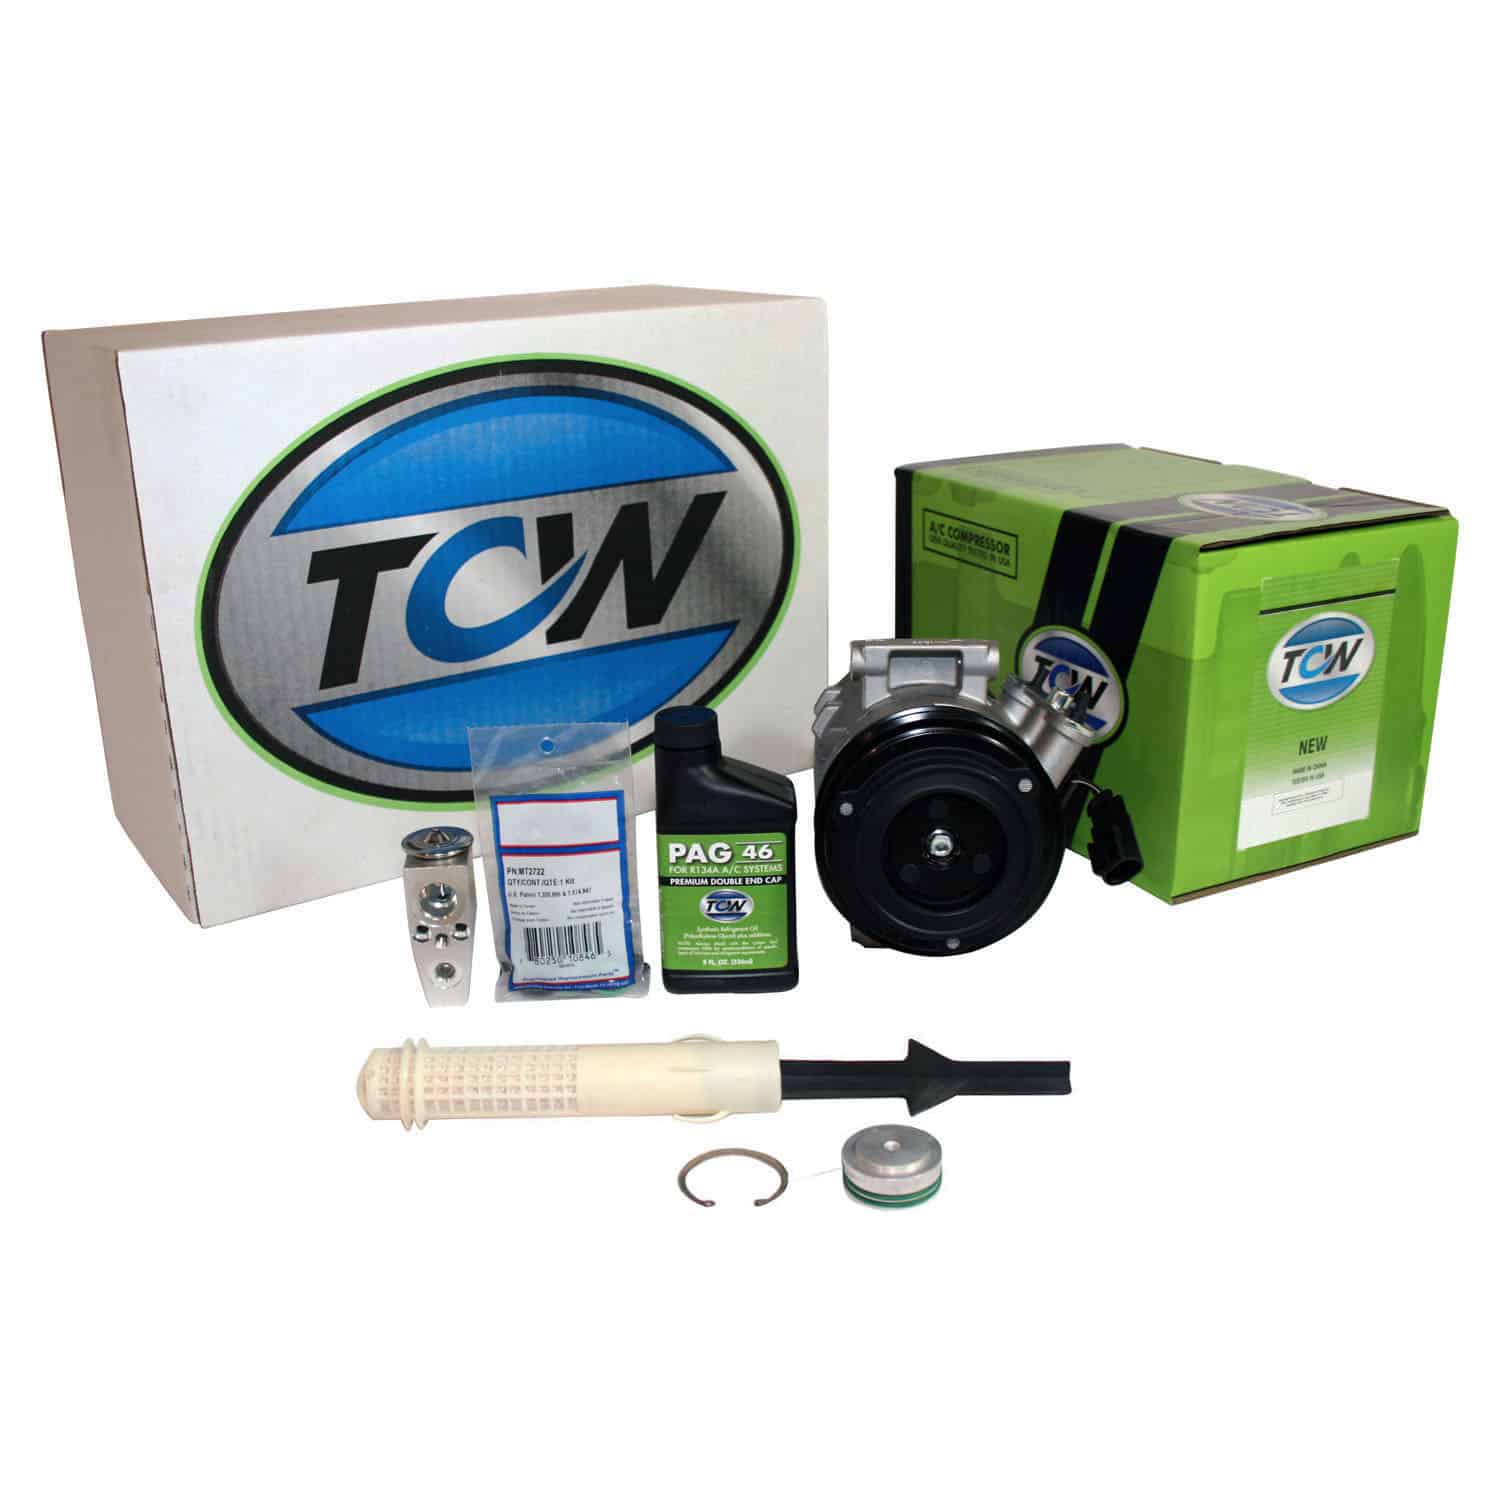 TCW Vehicle A/C Kit K1000405N New Product Image field_60b6a13a6e67c